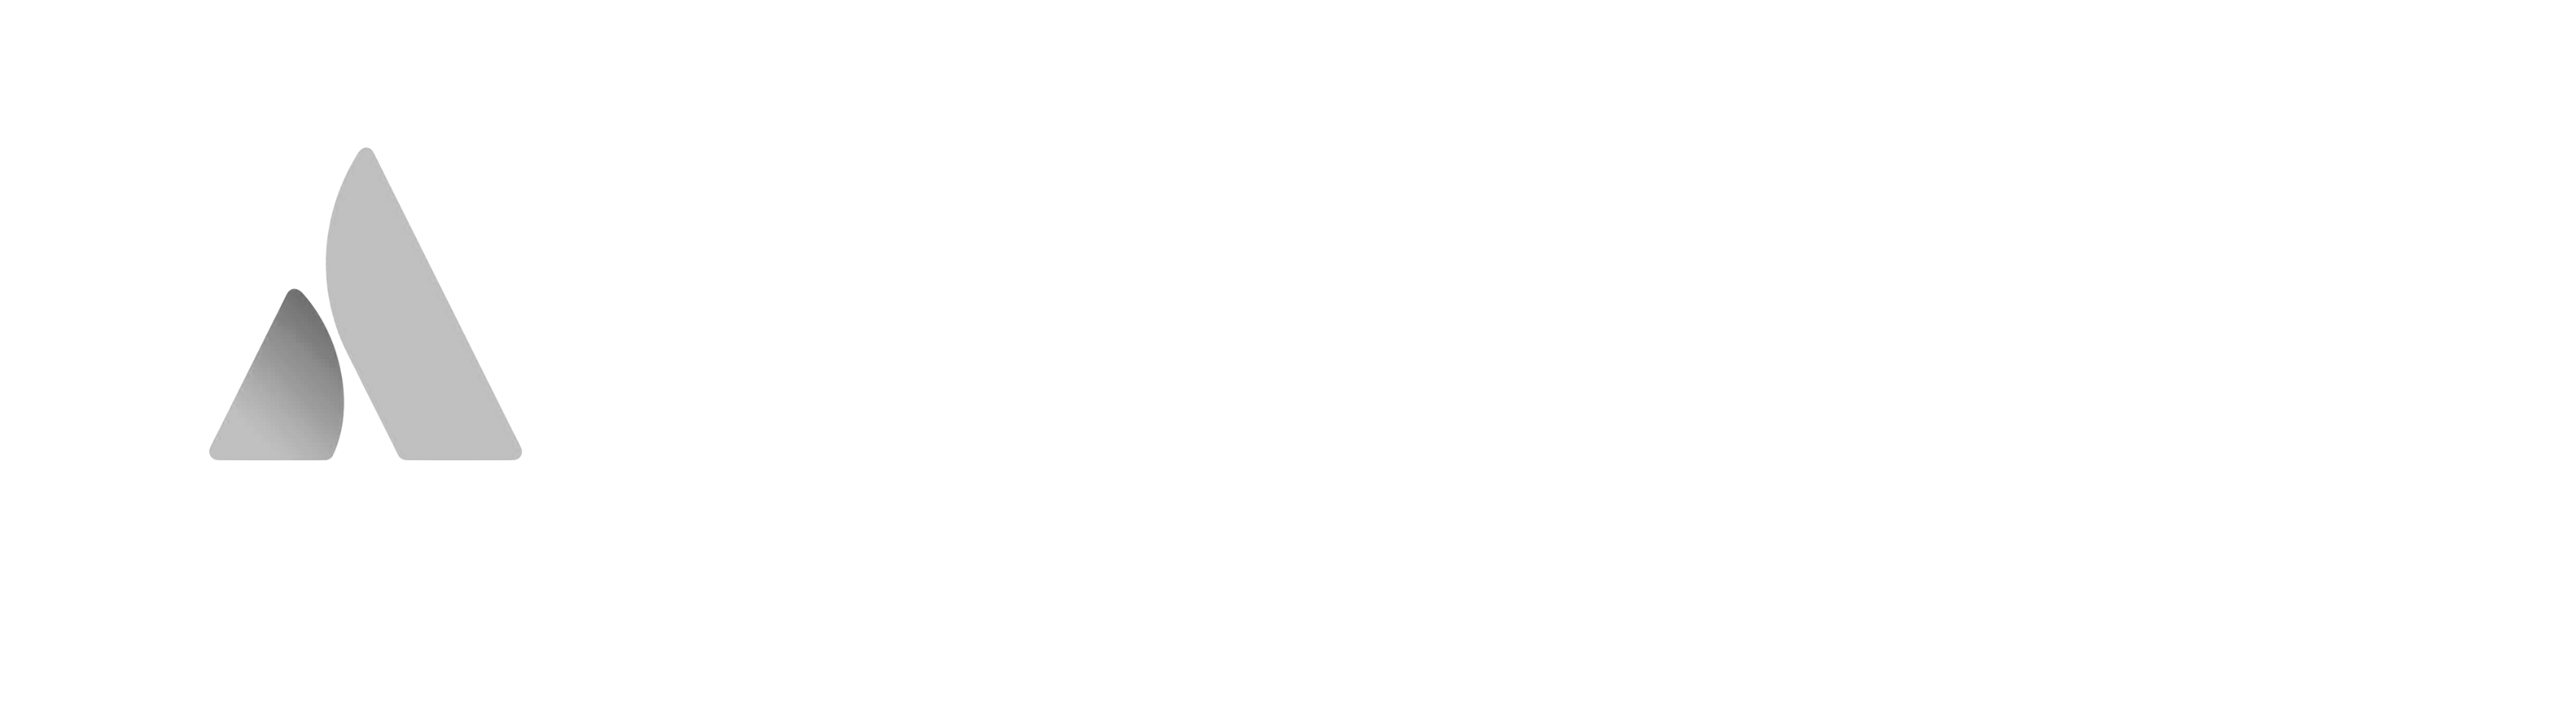 Asian Lanka Polysack